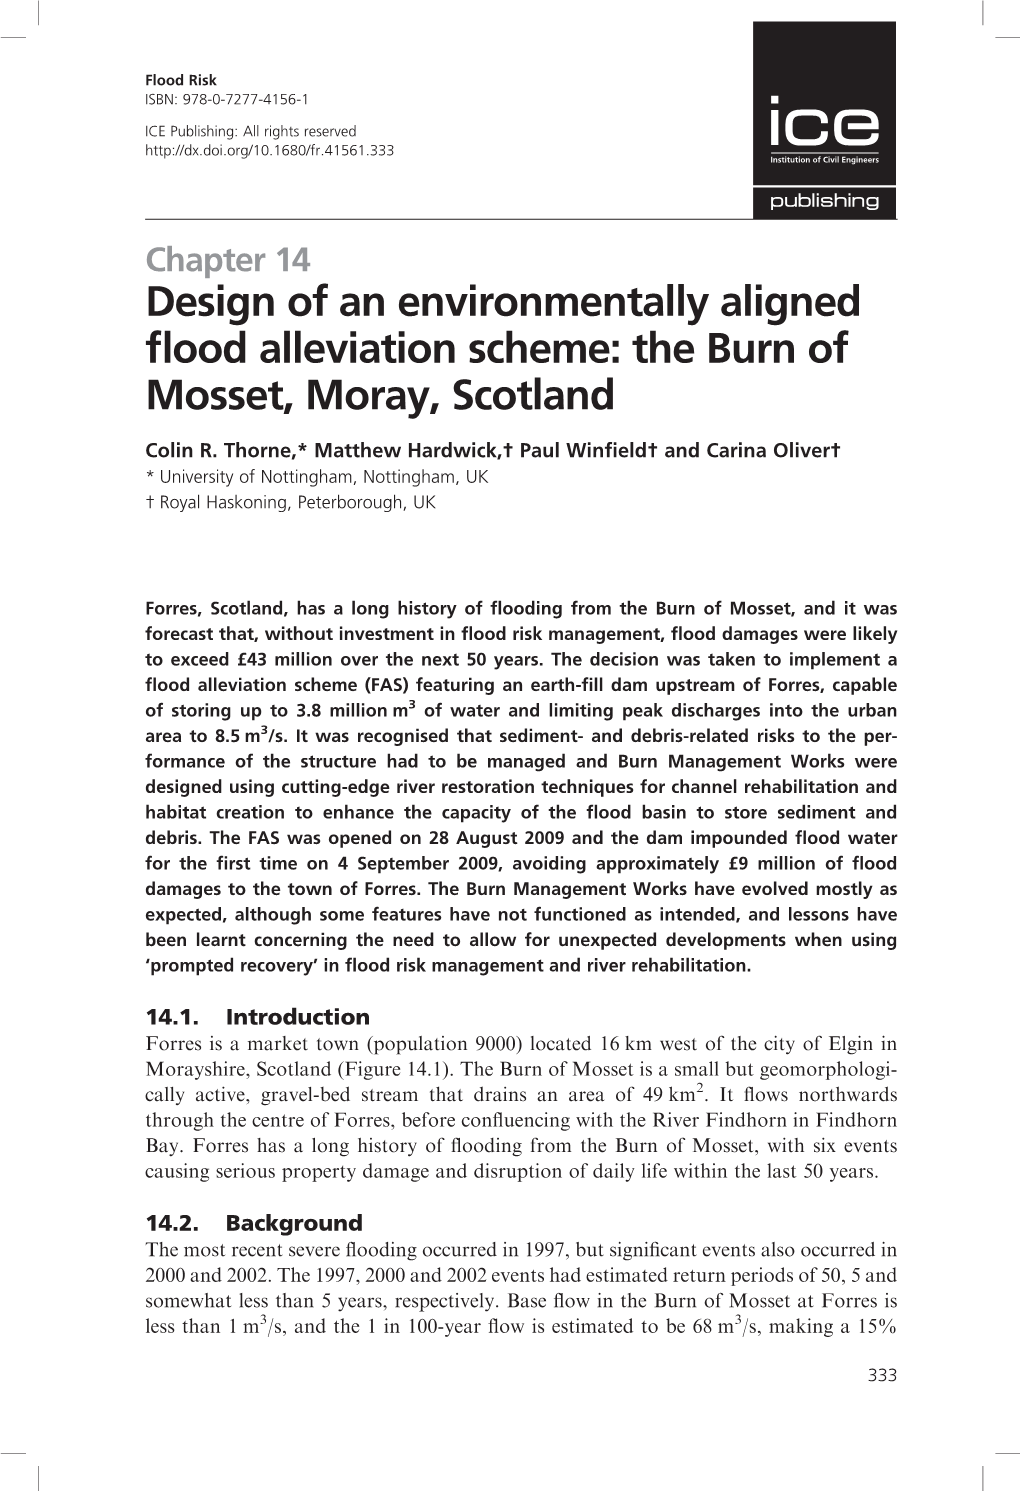 Design of an Environmentally Aligned Flood Alleviation Scheme: the Burn of Mosset, Moray, Scotland